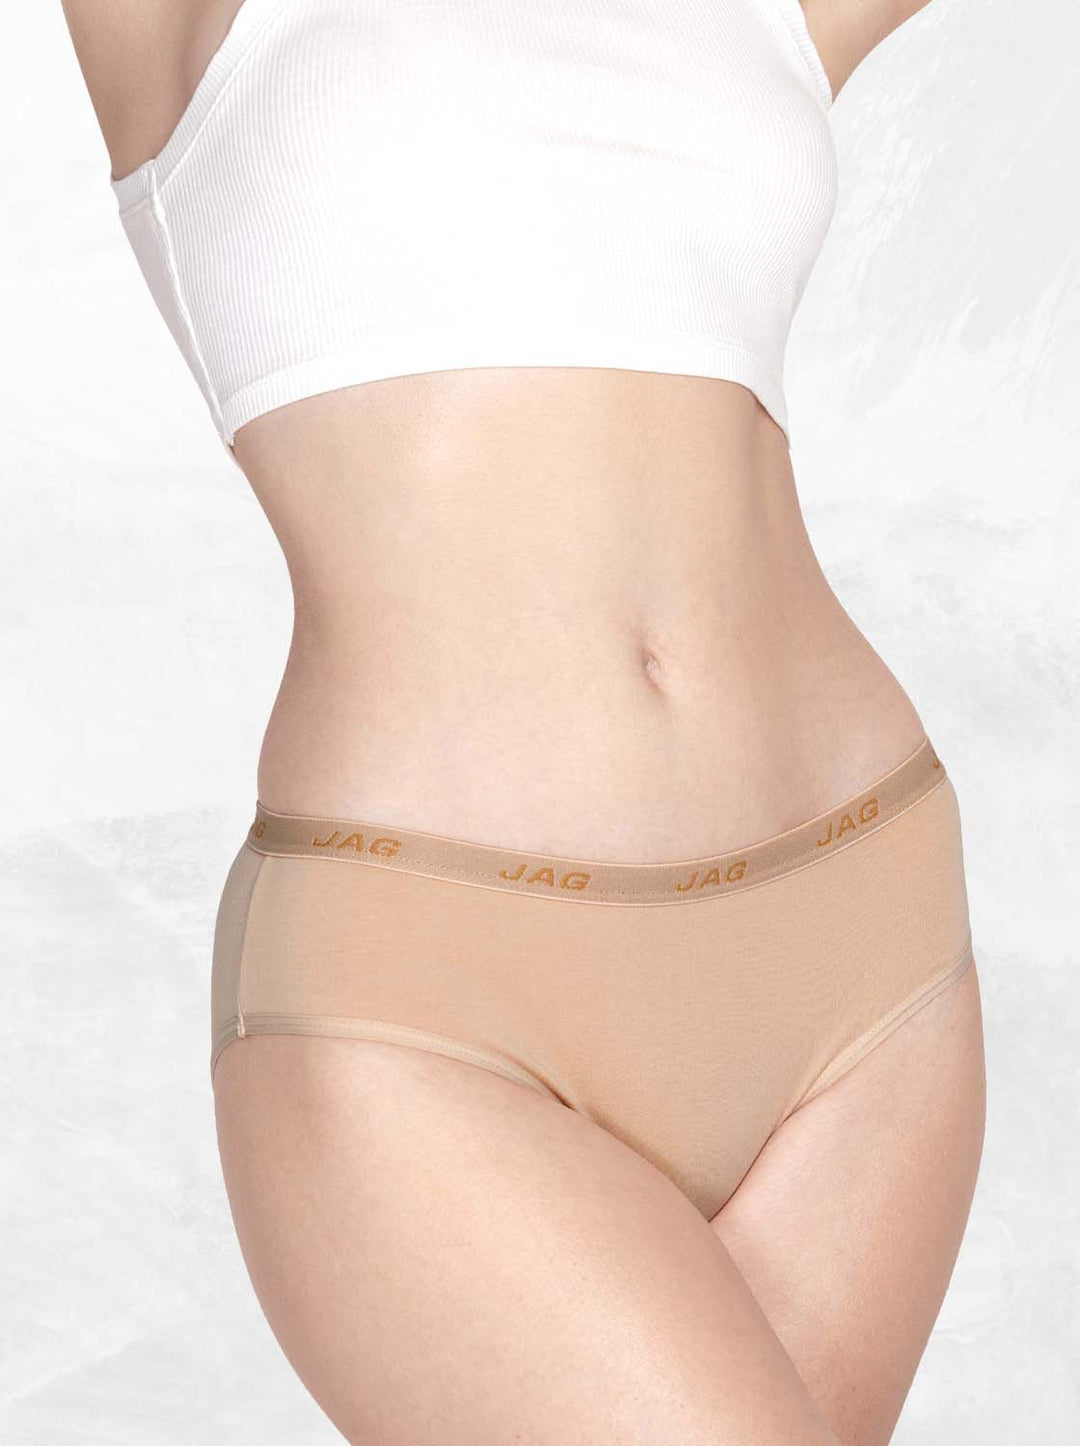 Jag Women's Underwear Cotton Stretch Bikini Single Pack